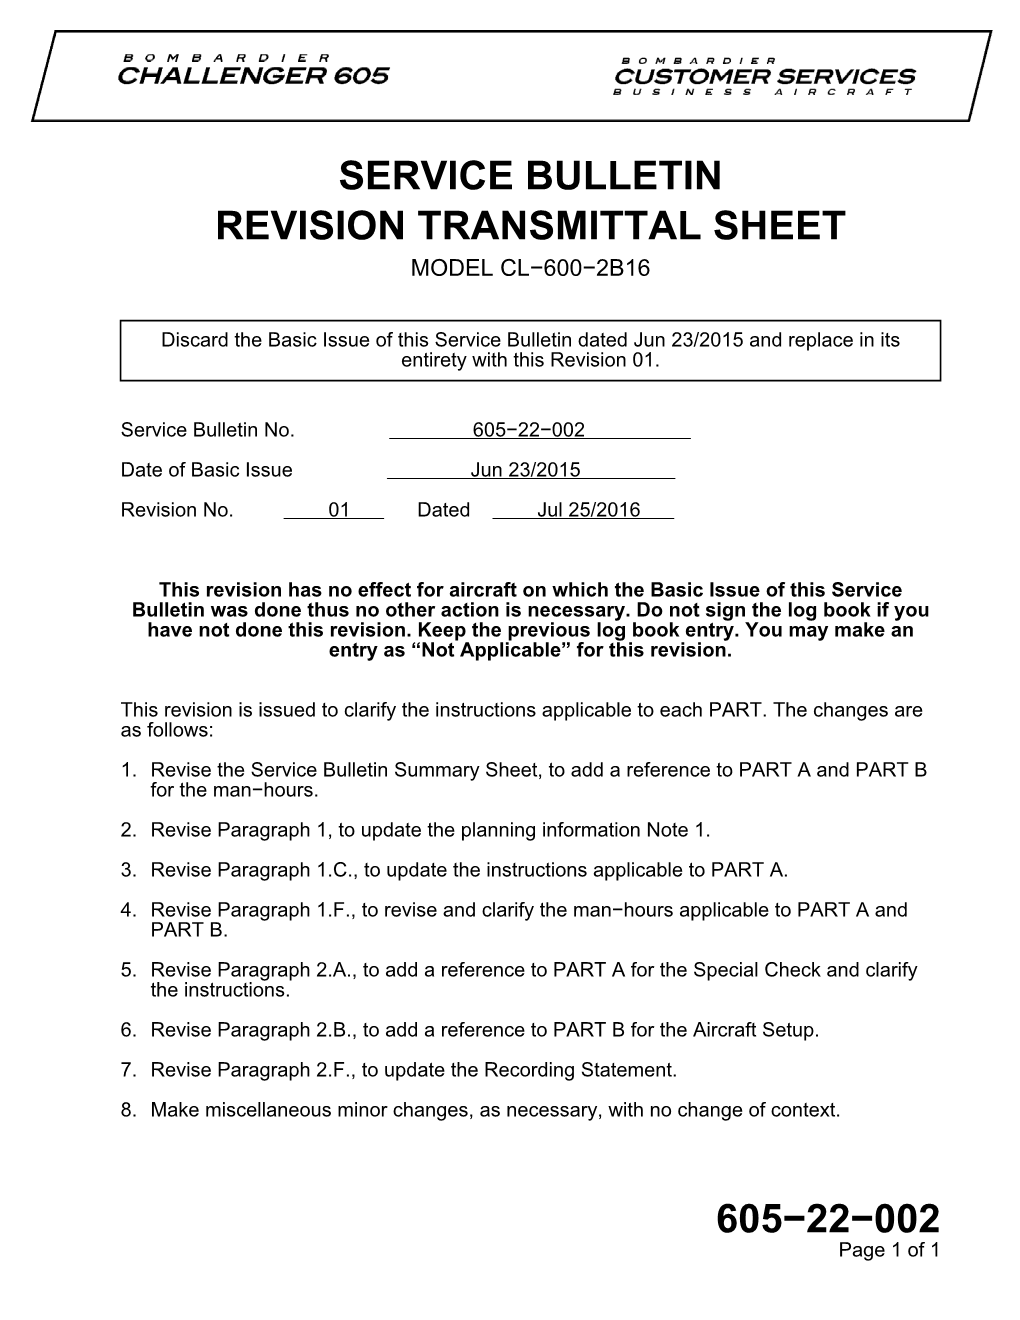 Service Bulletin 605−22−002 Revision Transmittal Sheet